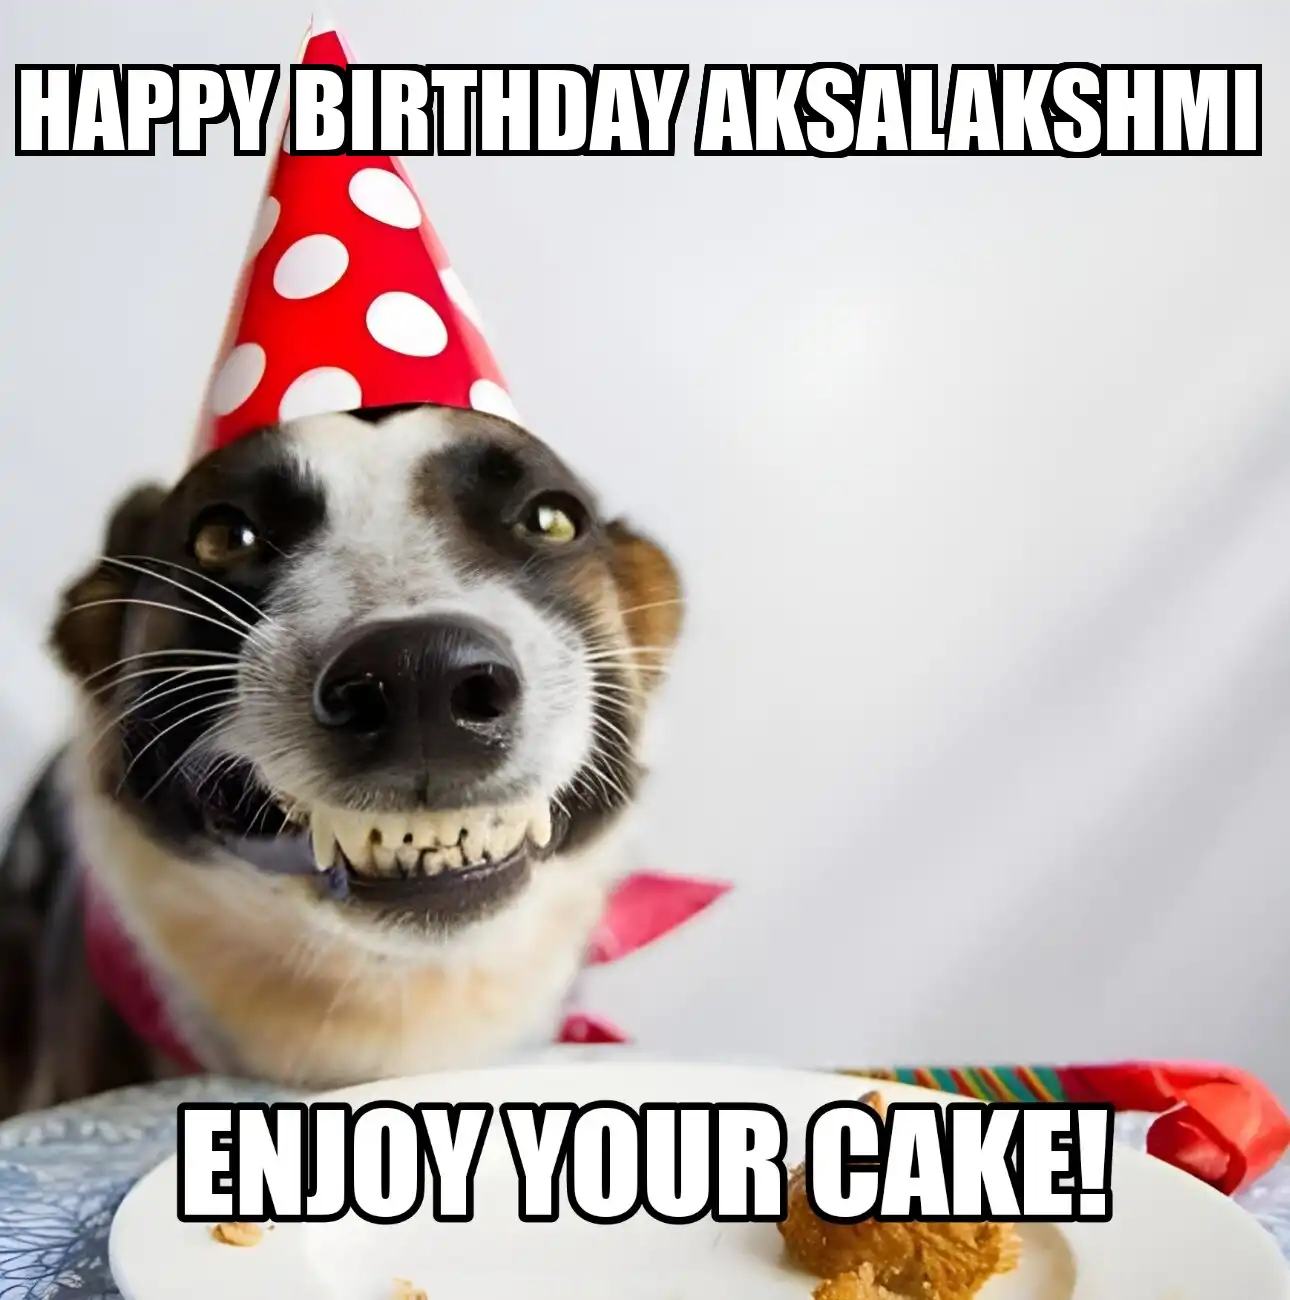 Happy Birthday Aksalakshmi Enjoy Your Cake Dog Meme